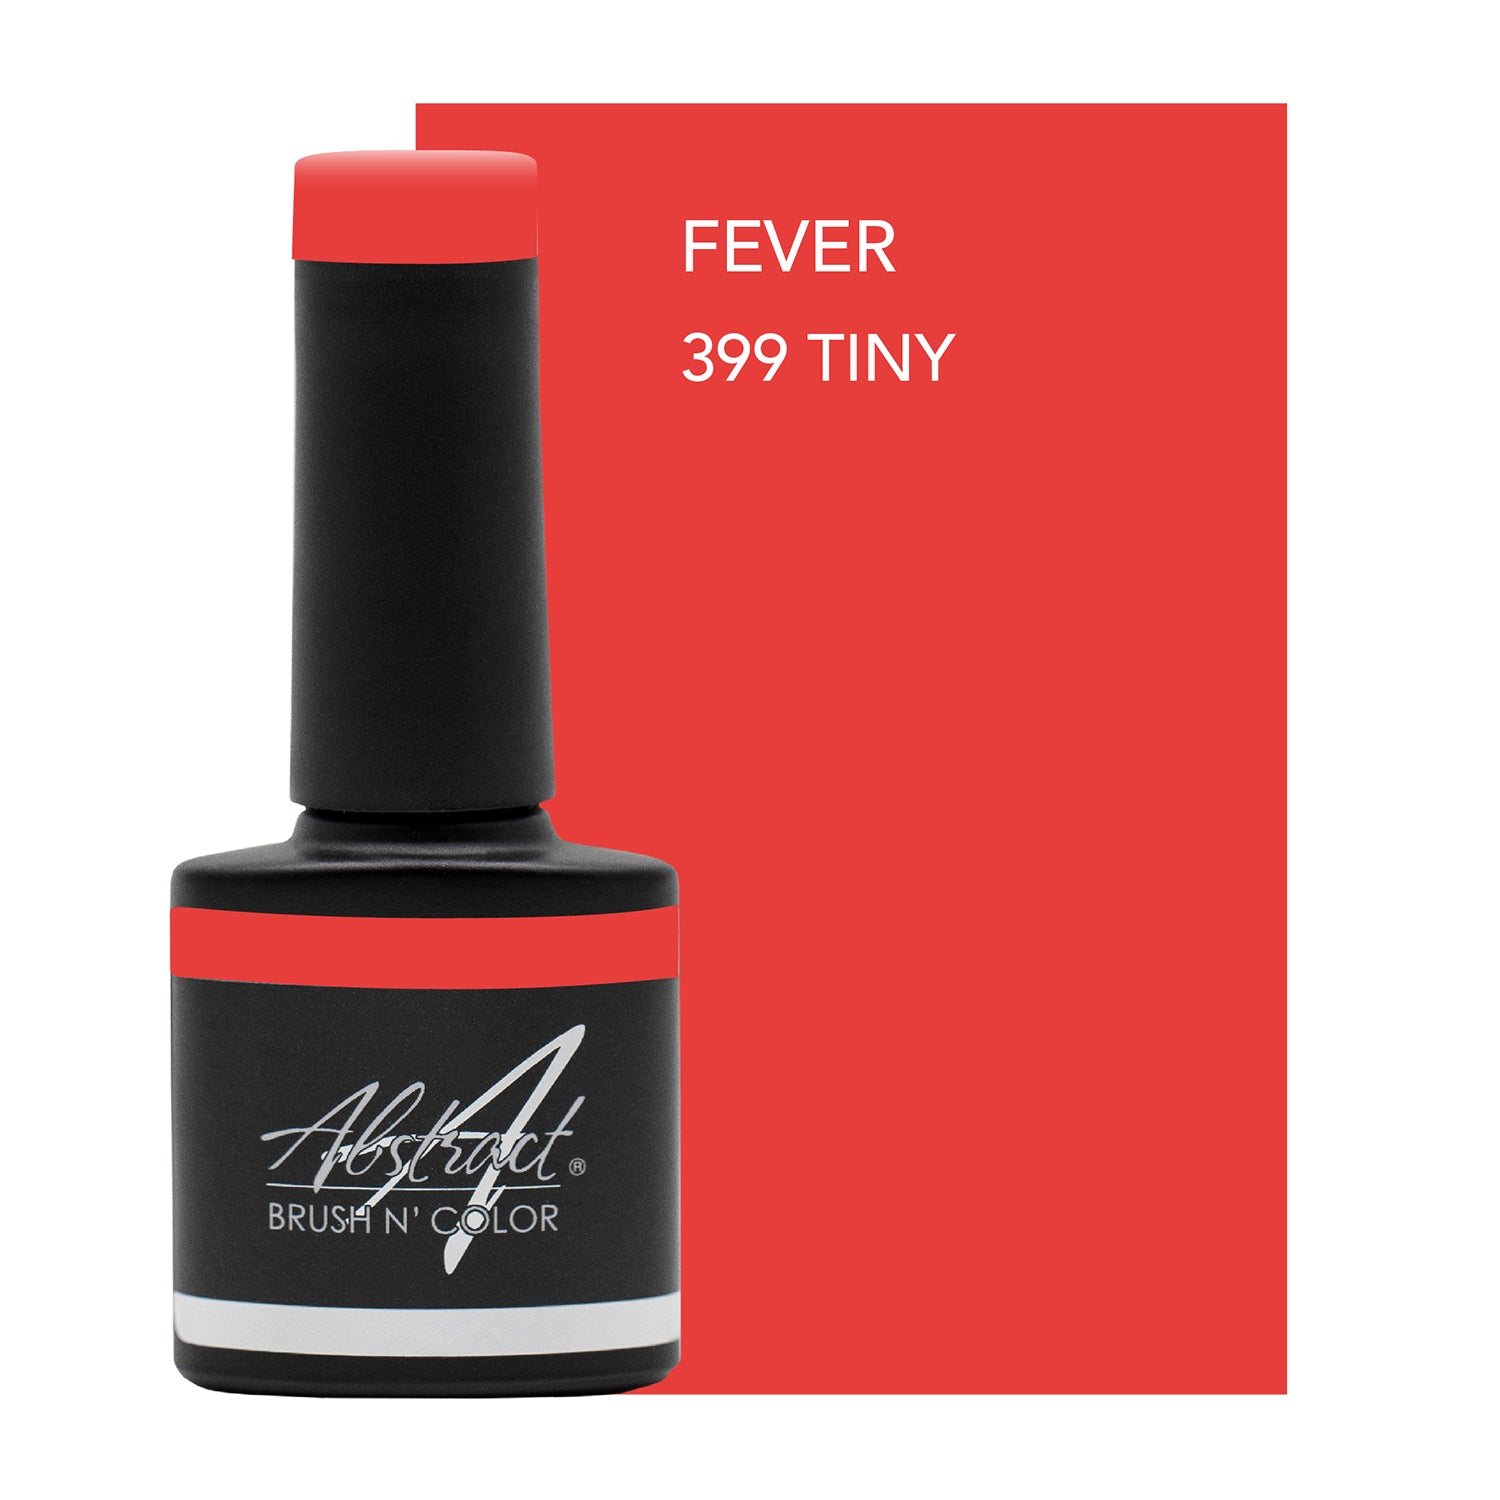 Fever tiny 7,5ml